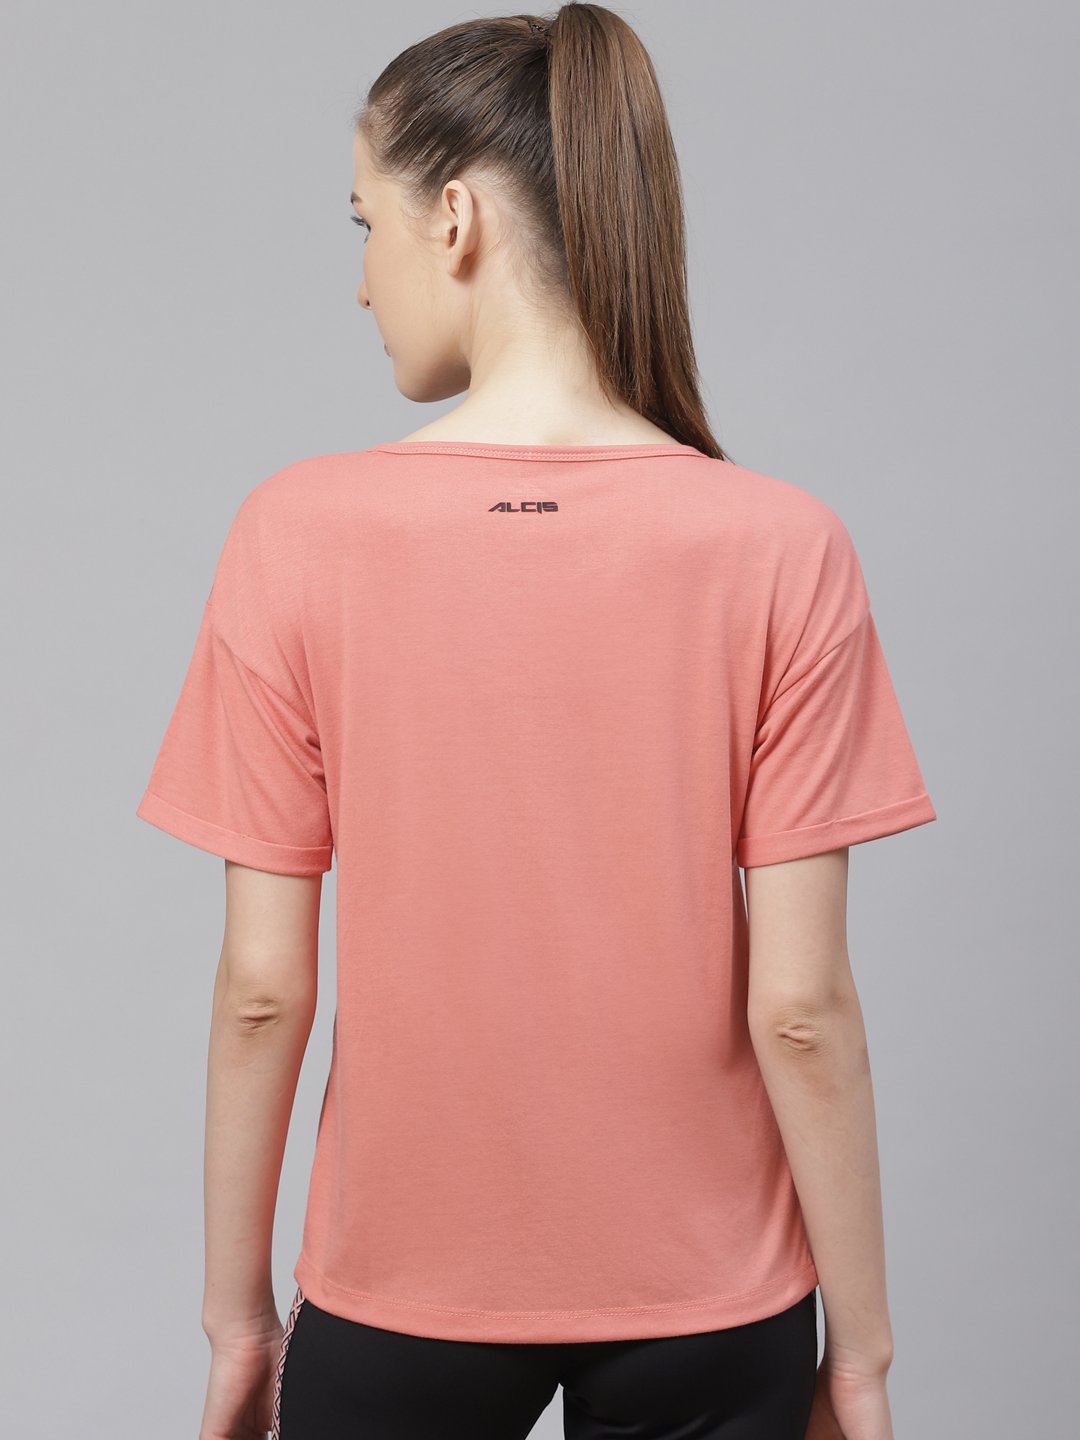 Alcis Women Peach-Coloured Printed Round Neck T-shirt